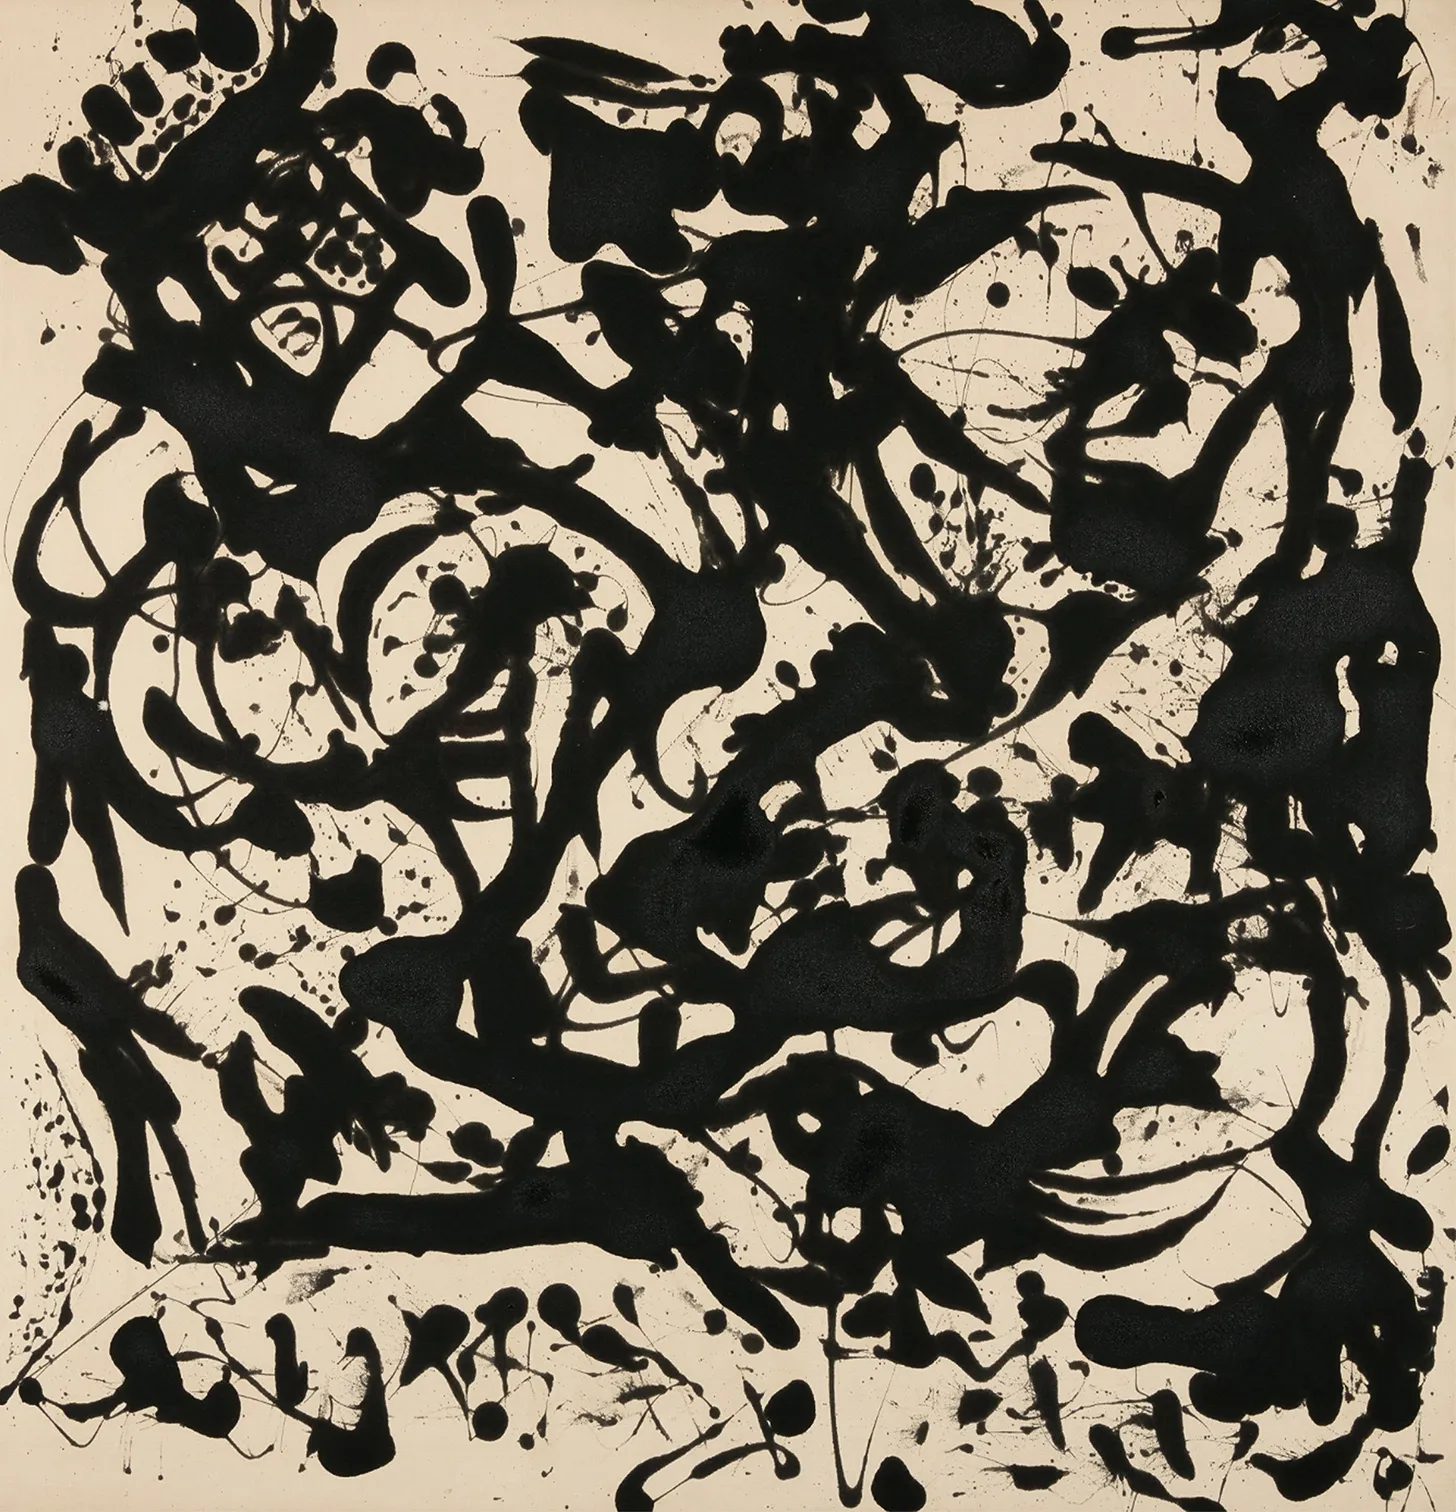 Jackson Pollock, *Number 17*, 1951